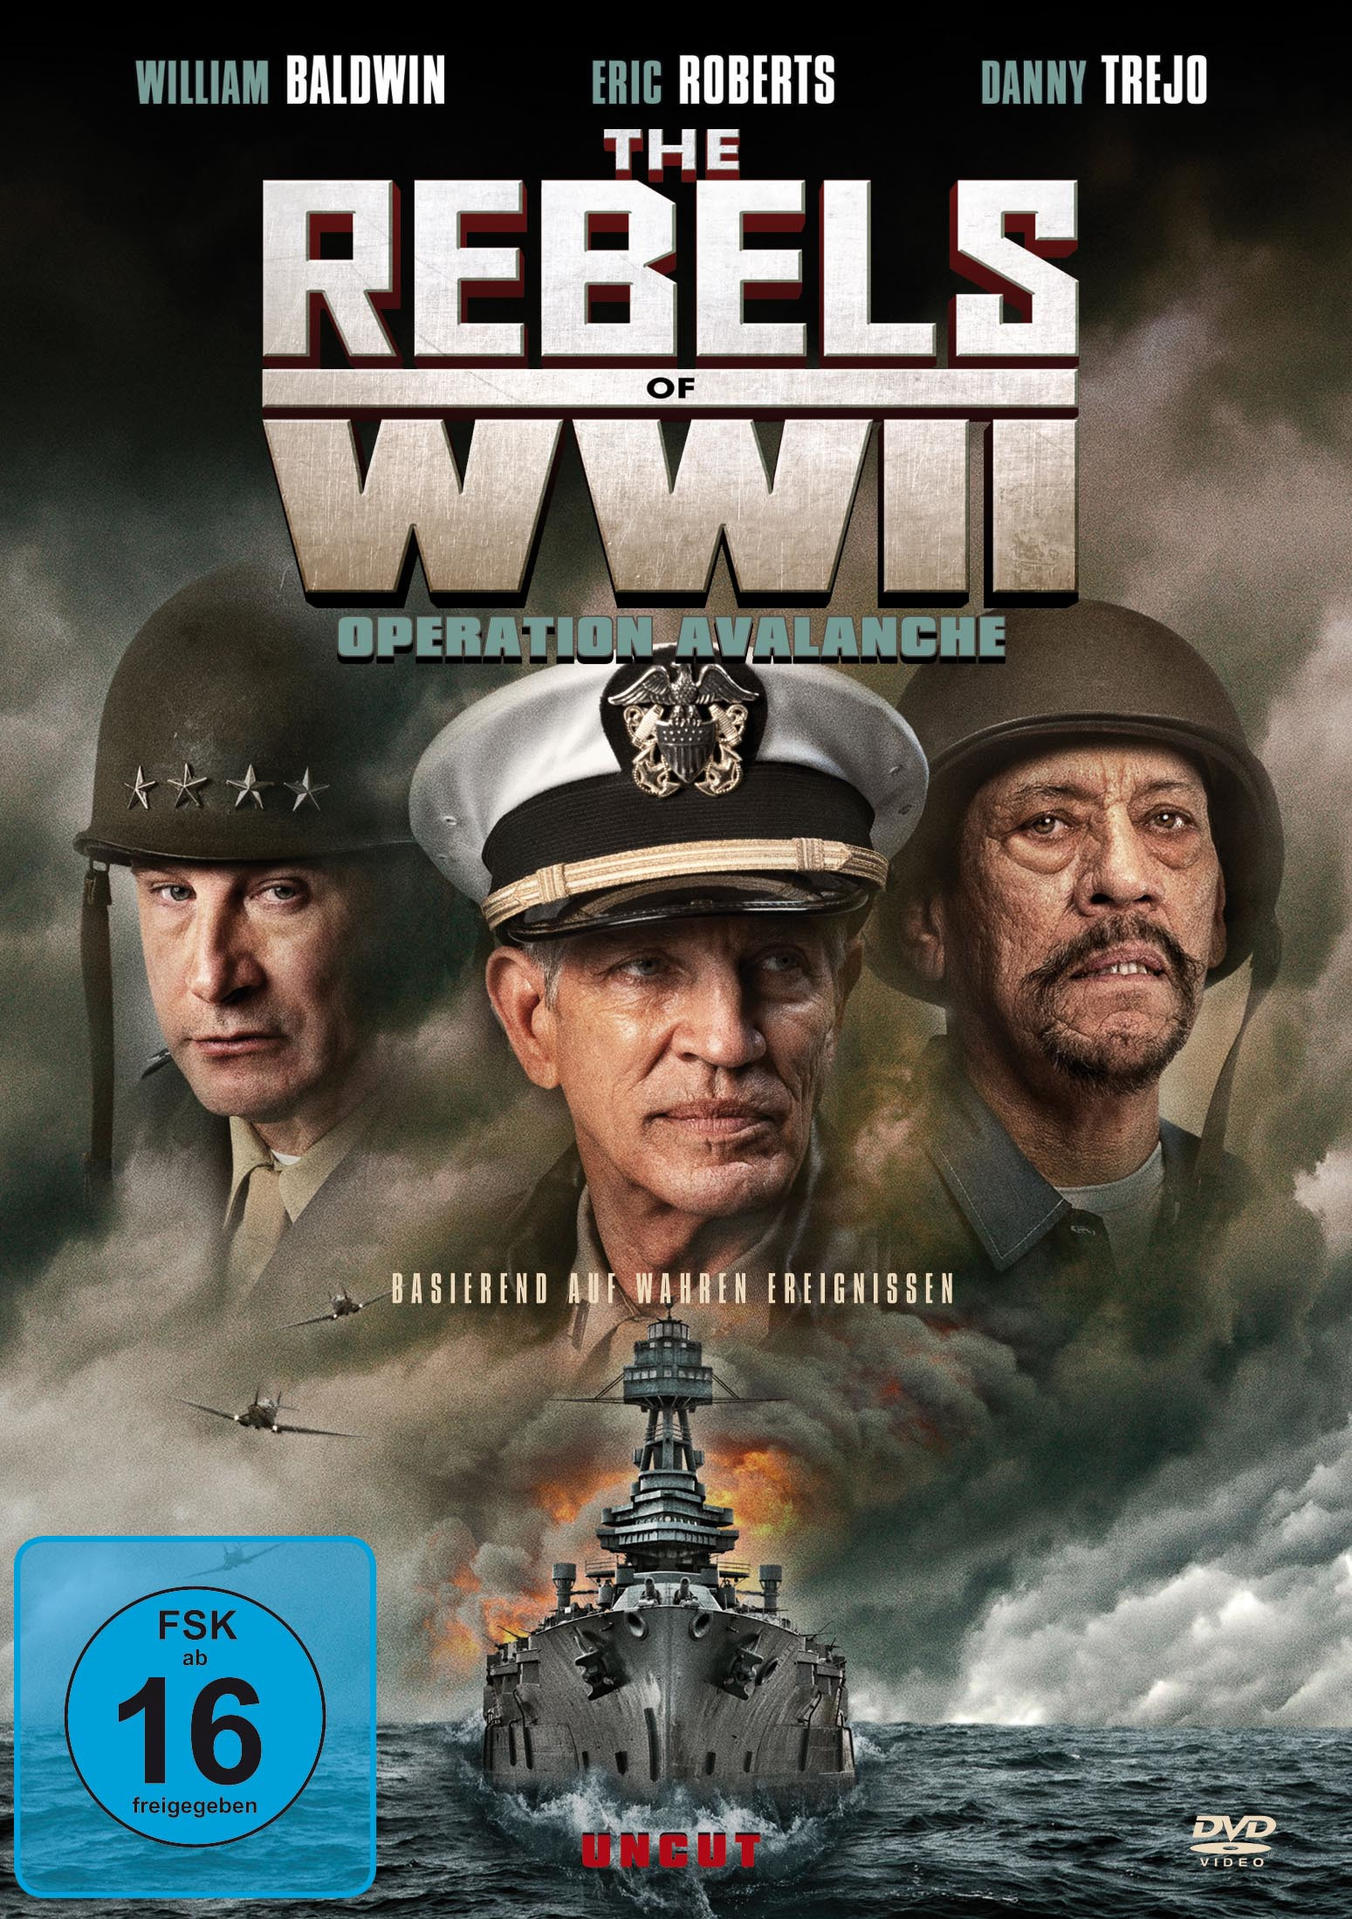 DVD Avalanche World War II-Operation of Rebels